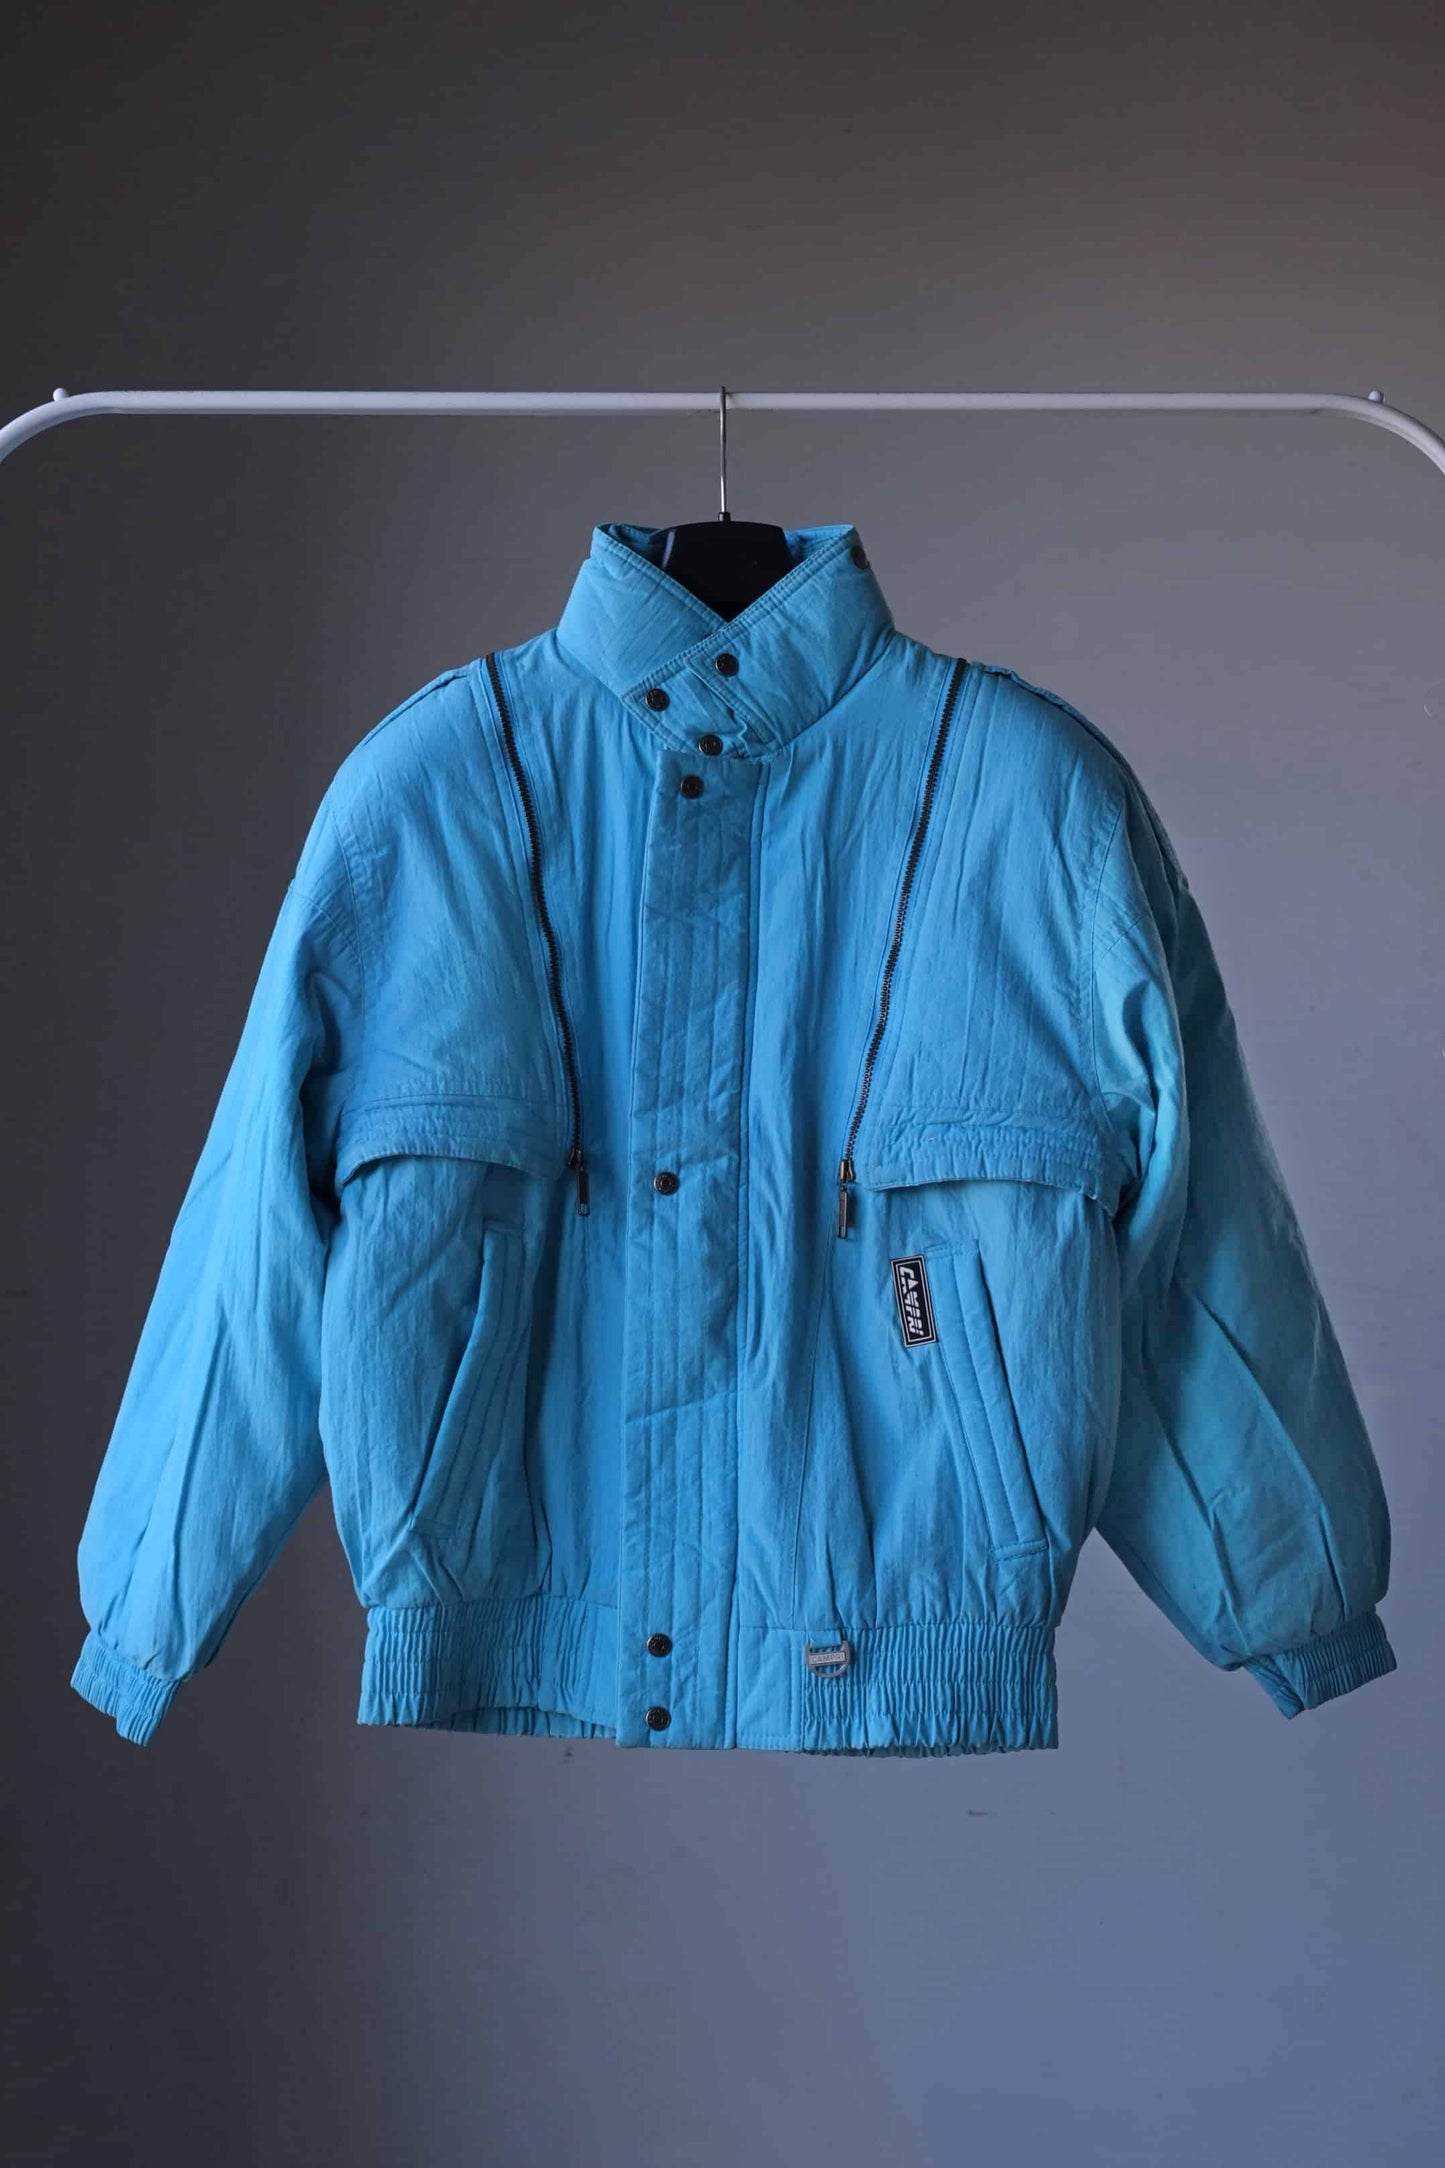 Vintage 90's Ski Jacket w/ Removable Sleeves